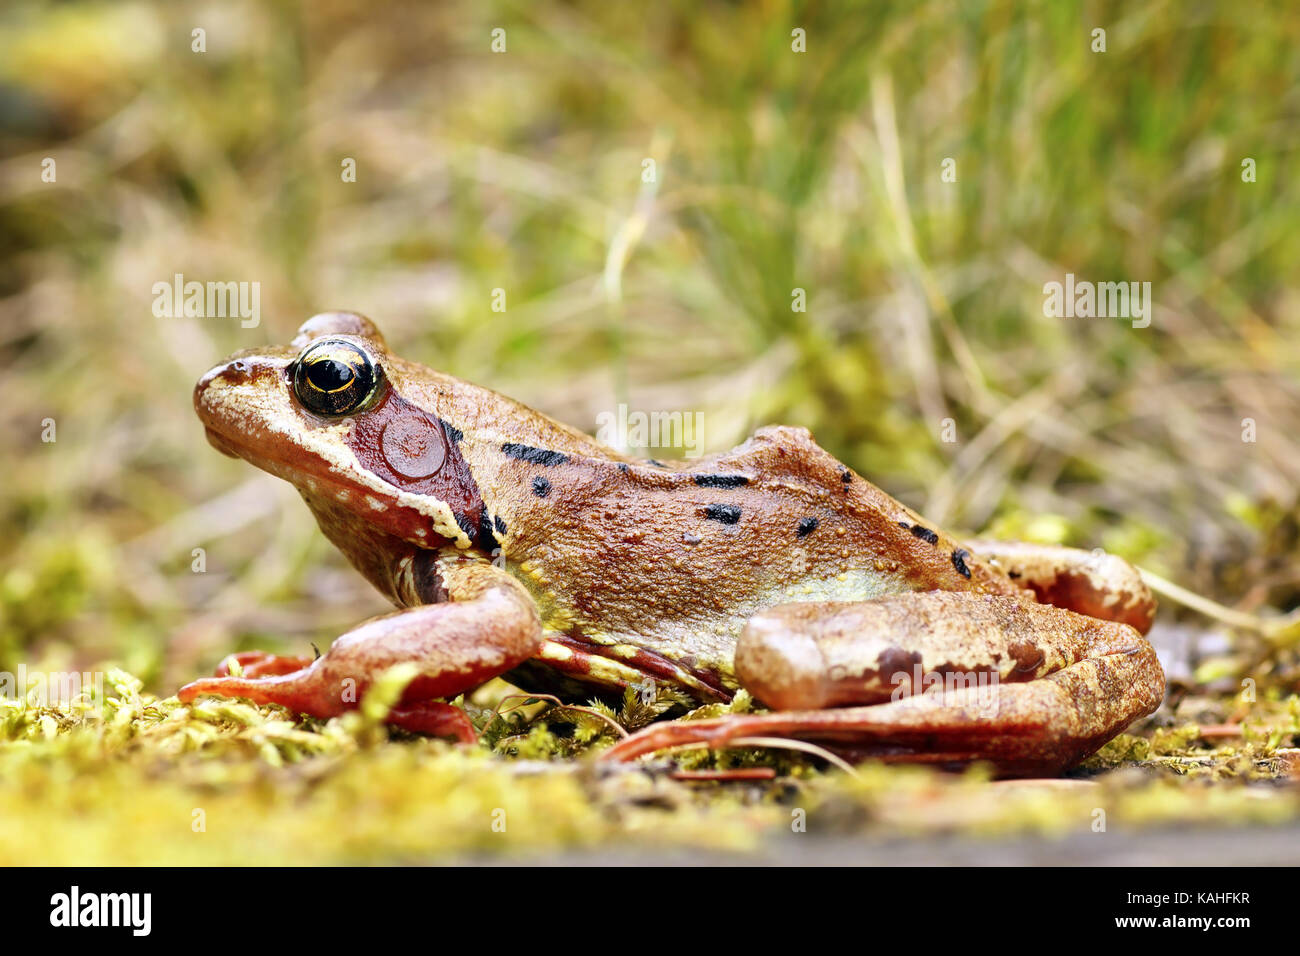 european common brown  frog in natural habitat ( Rana temporaria ), full length Stock Photo